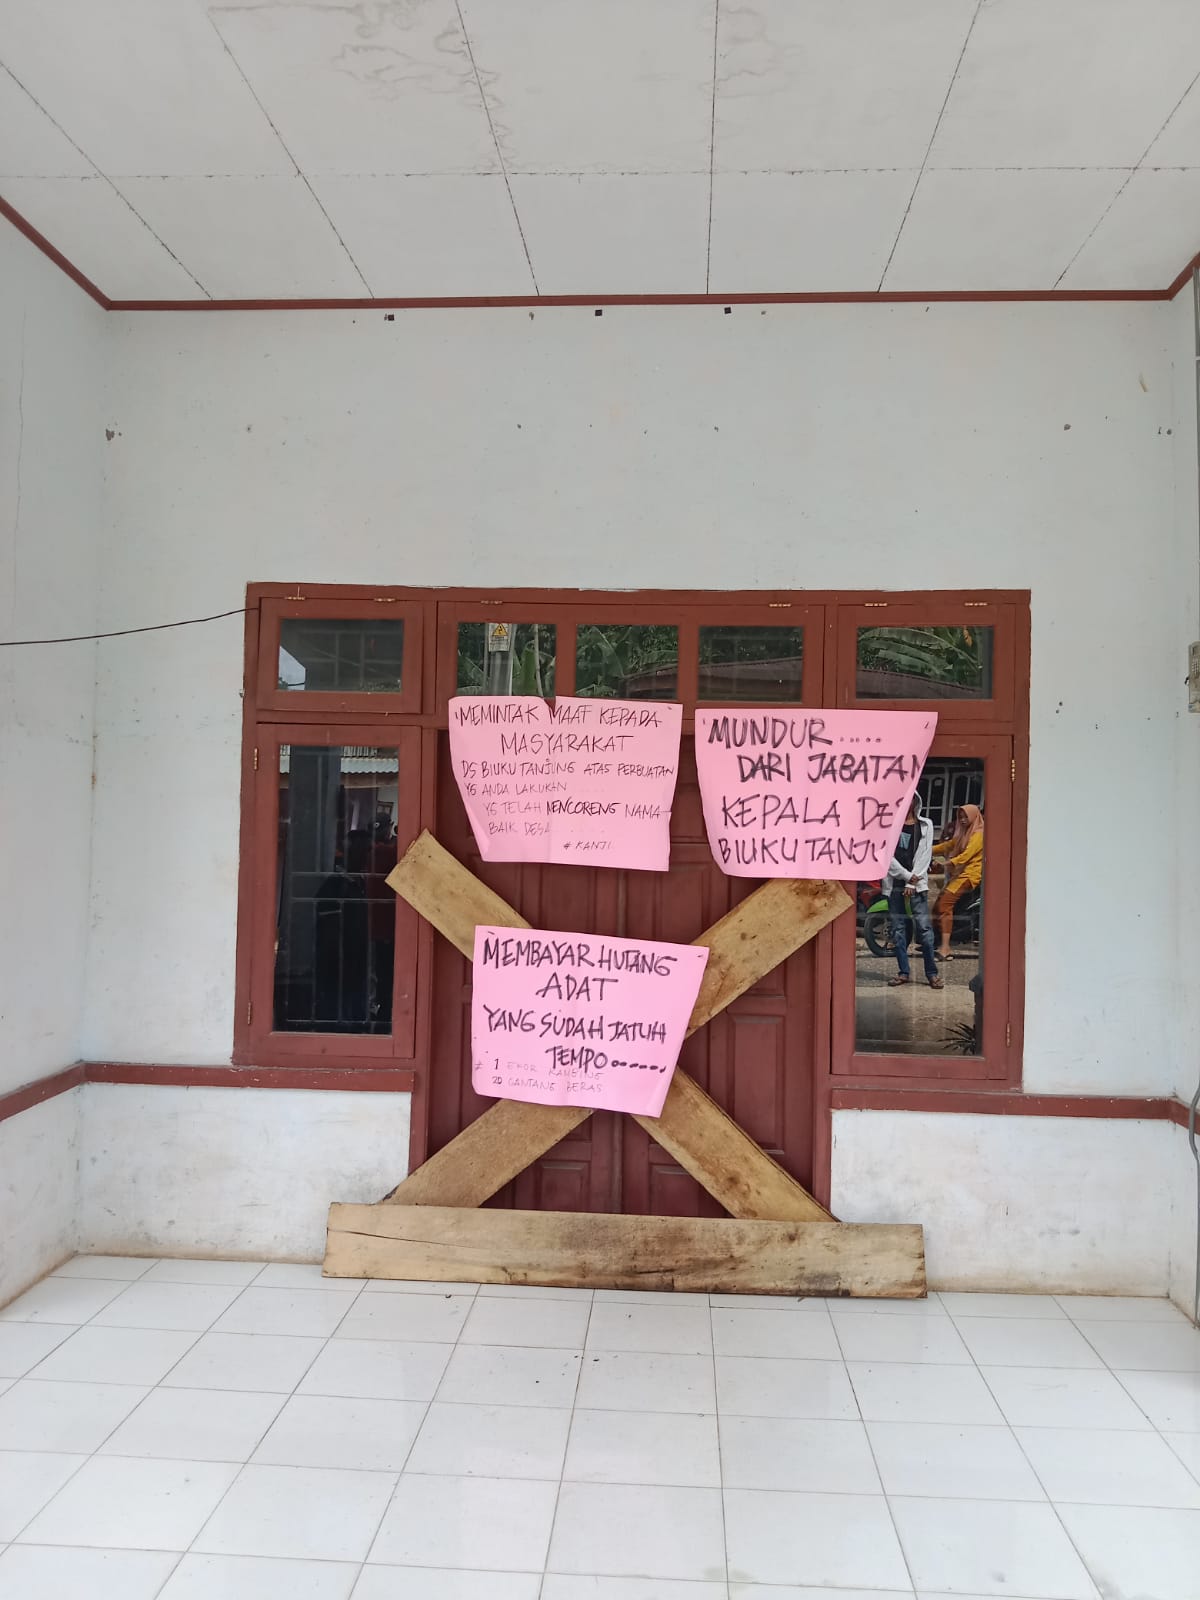 Kades di Merangin yang Kepergok Berduaan dengan Janda Tak Bayar Denda Adat, Warga Segel Kantor Desa Biuku